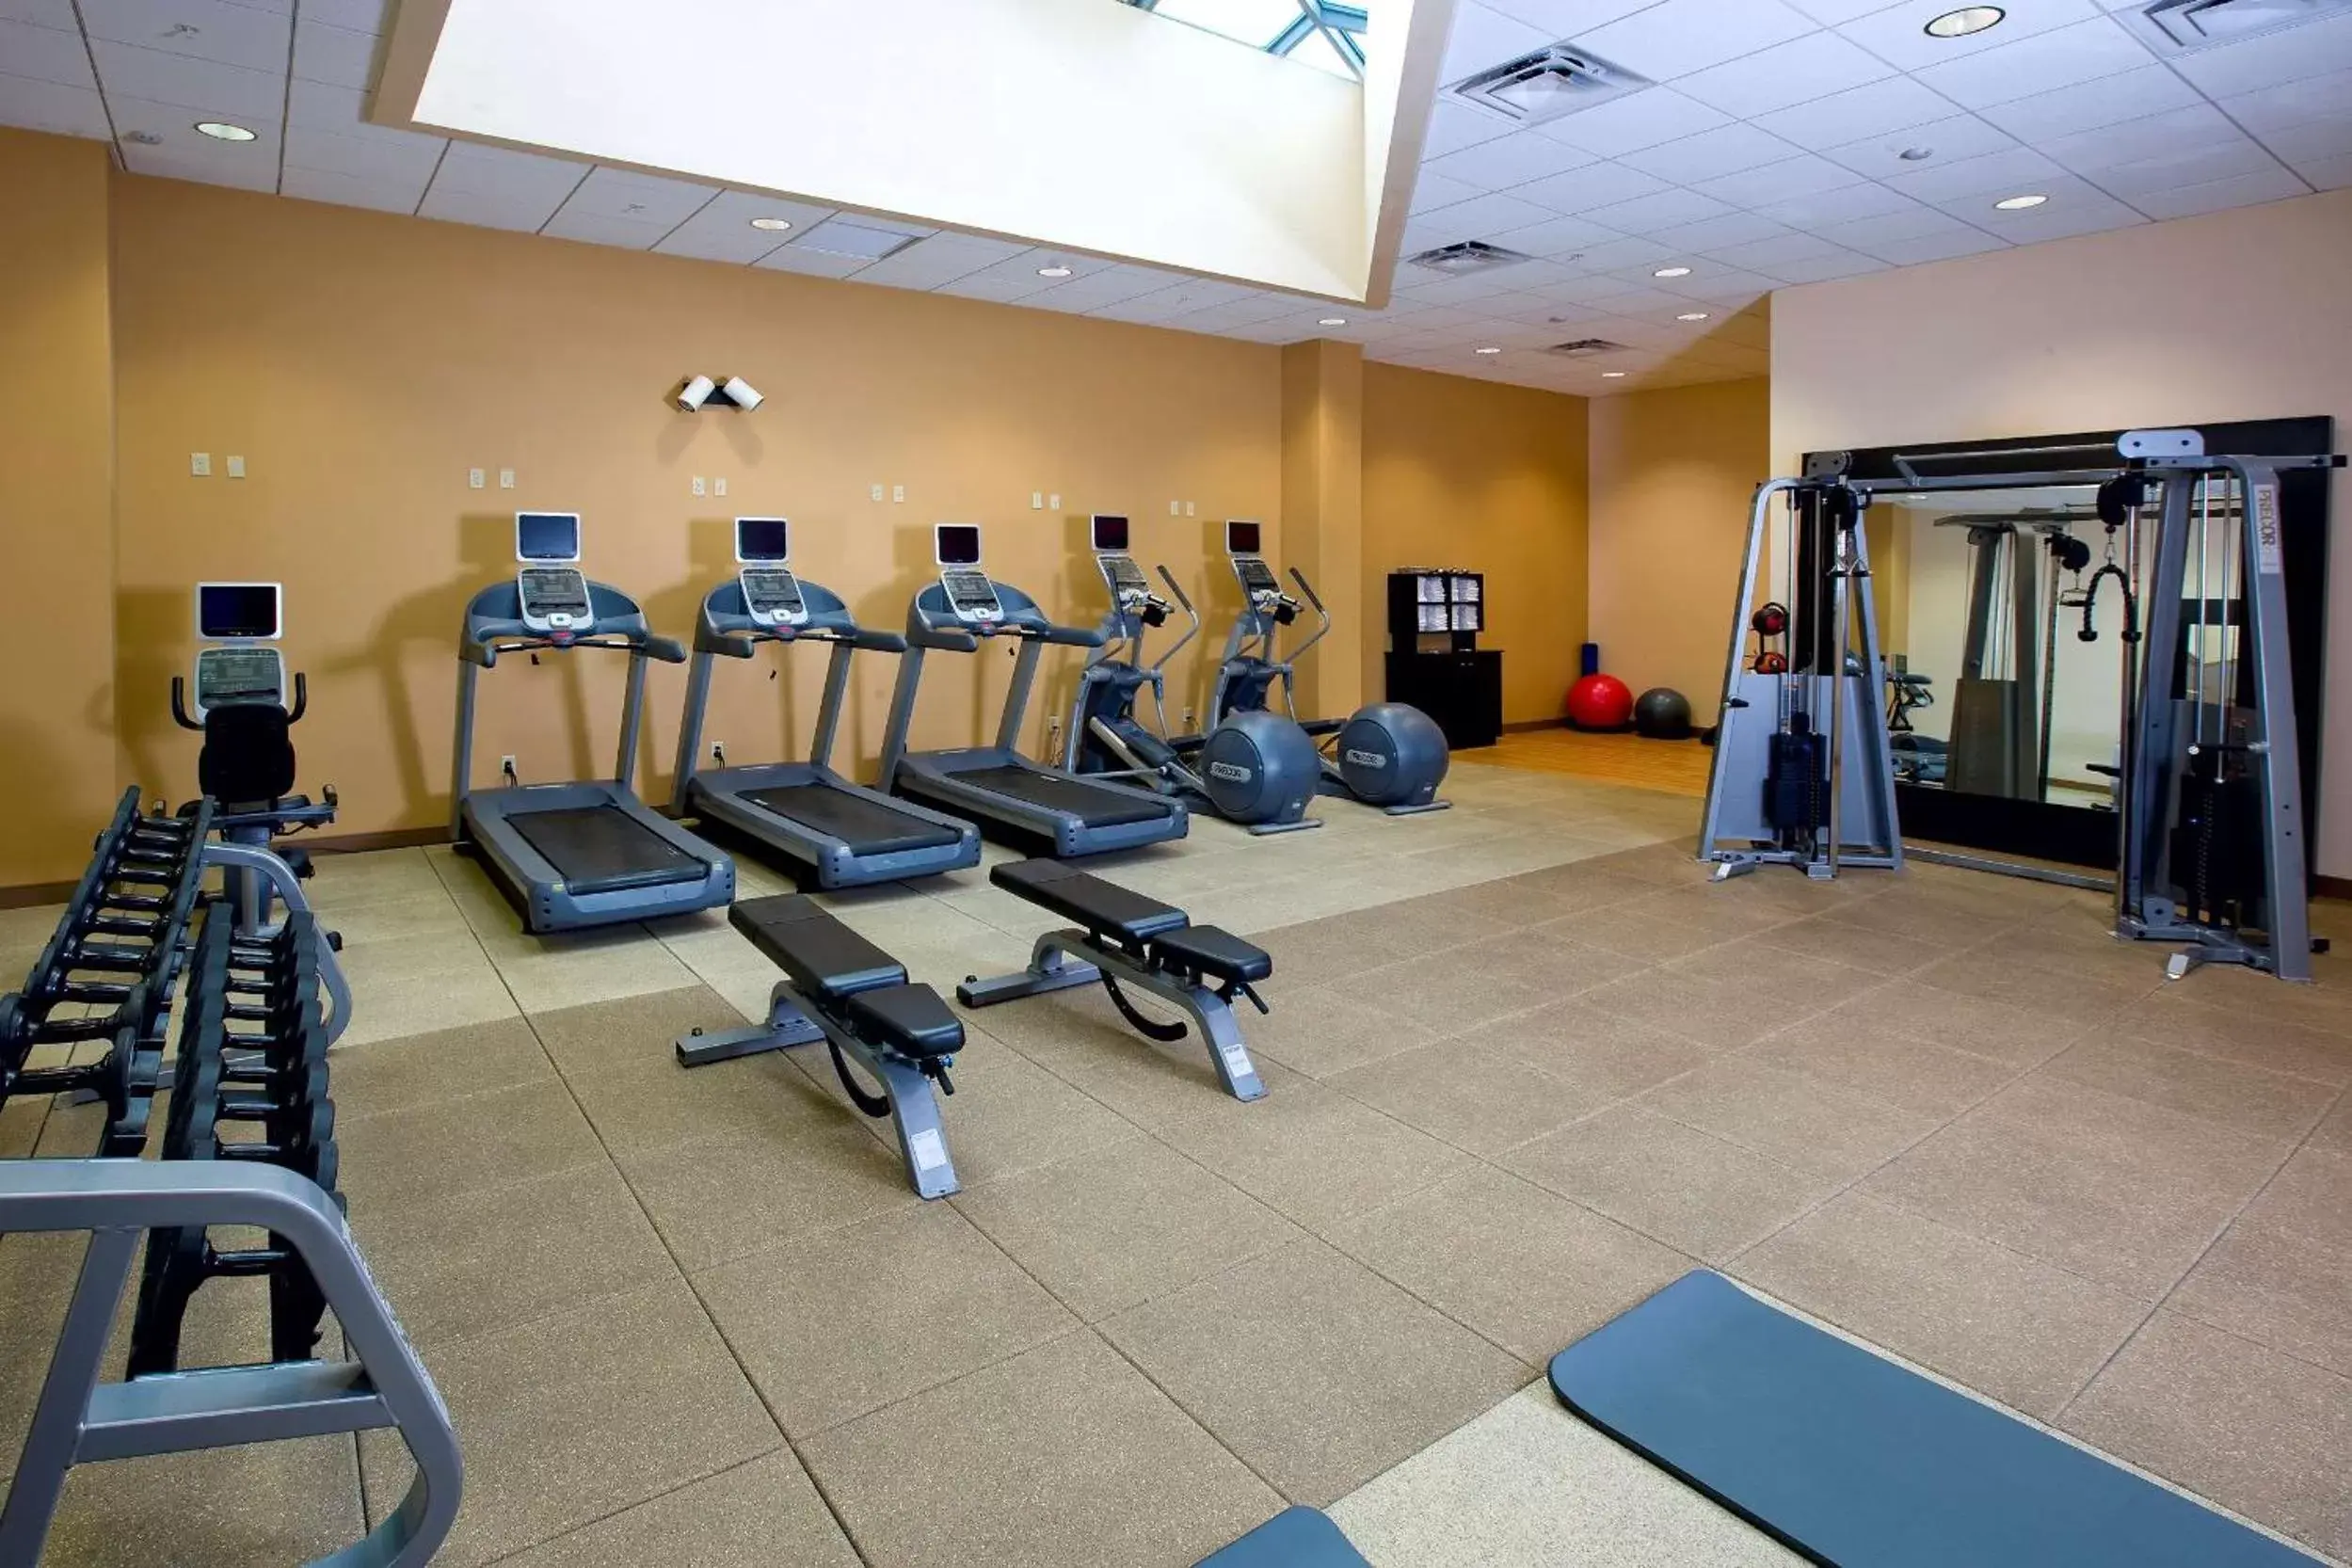 Fitness centre/facilities, Fitness Center/Facilities in Hilton Melbourne